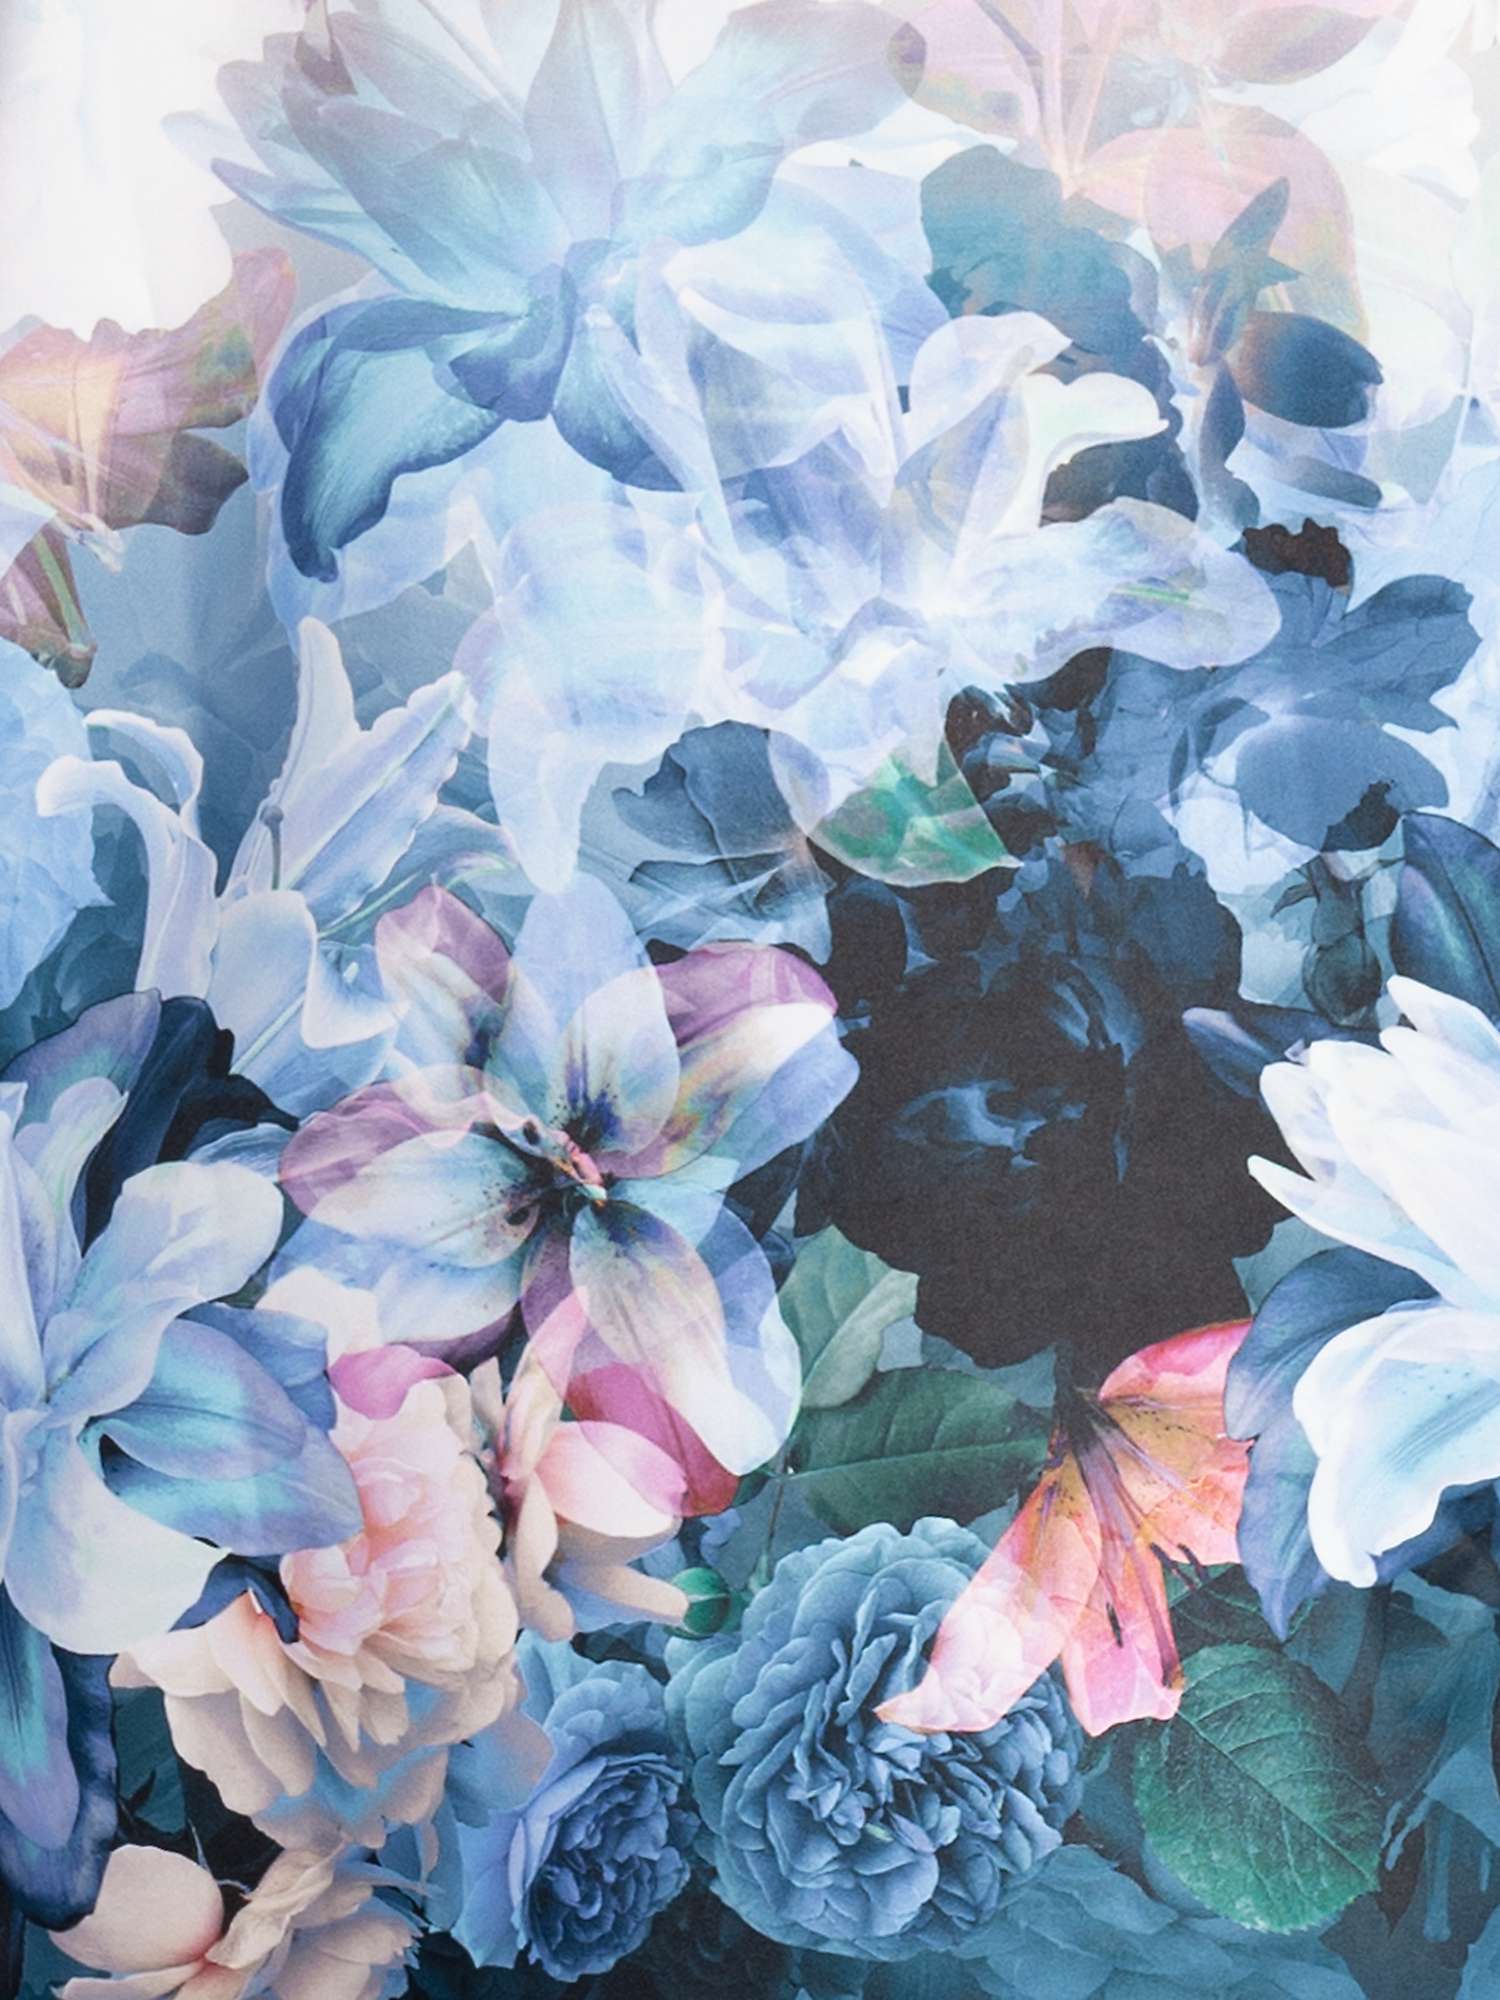 Buy chesca Longline Floral Satin Coat, Lilac/Blue Online at johnlewis.com